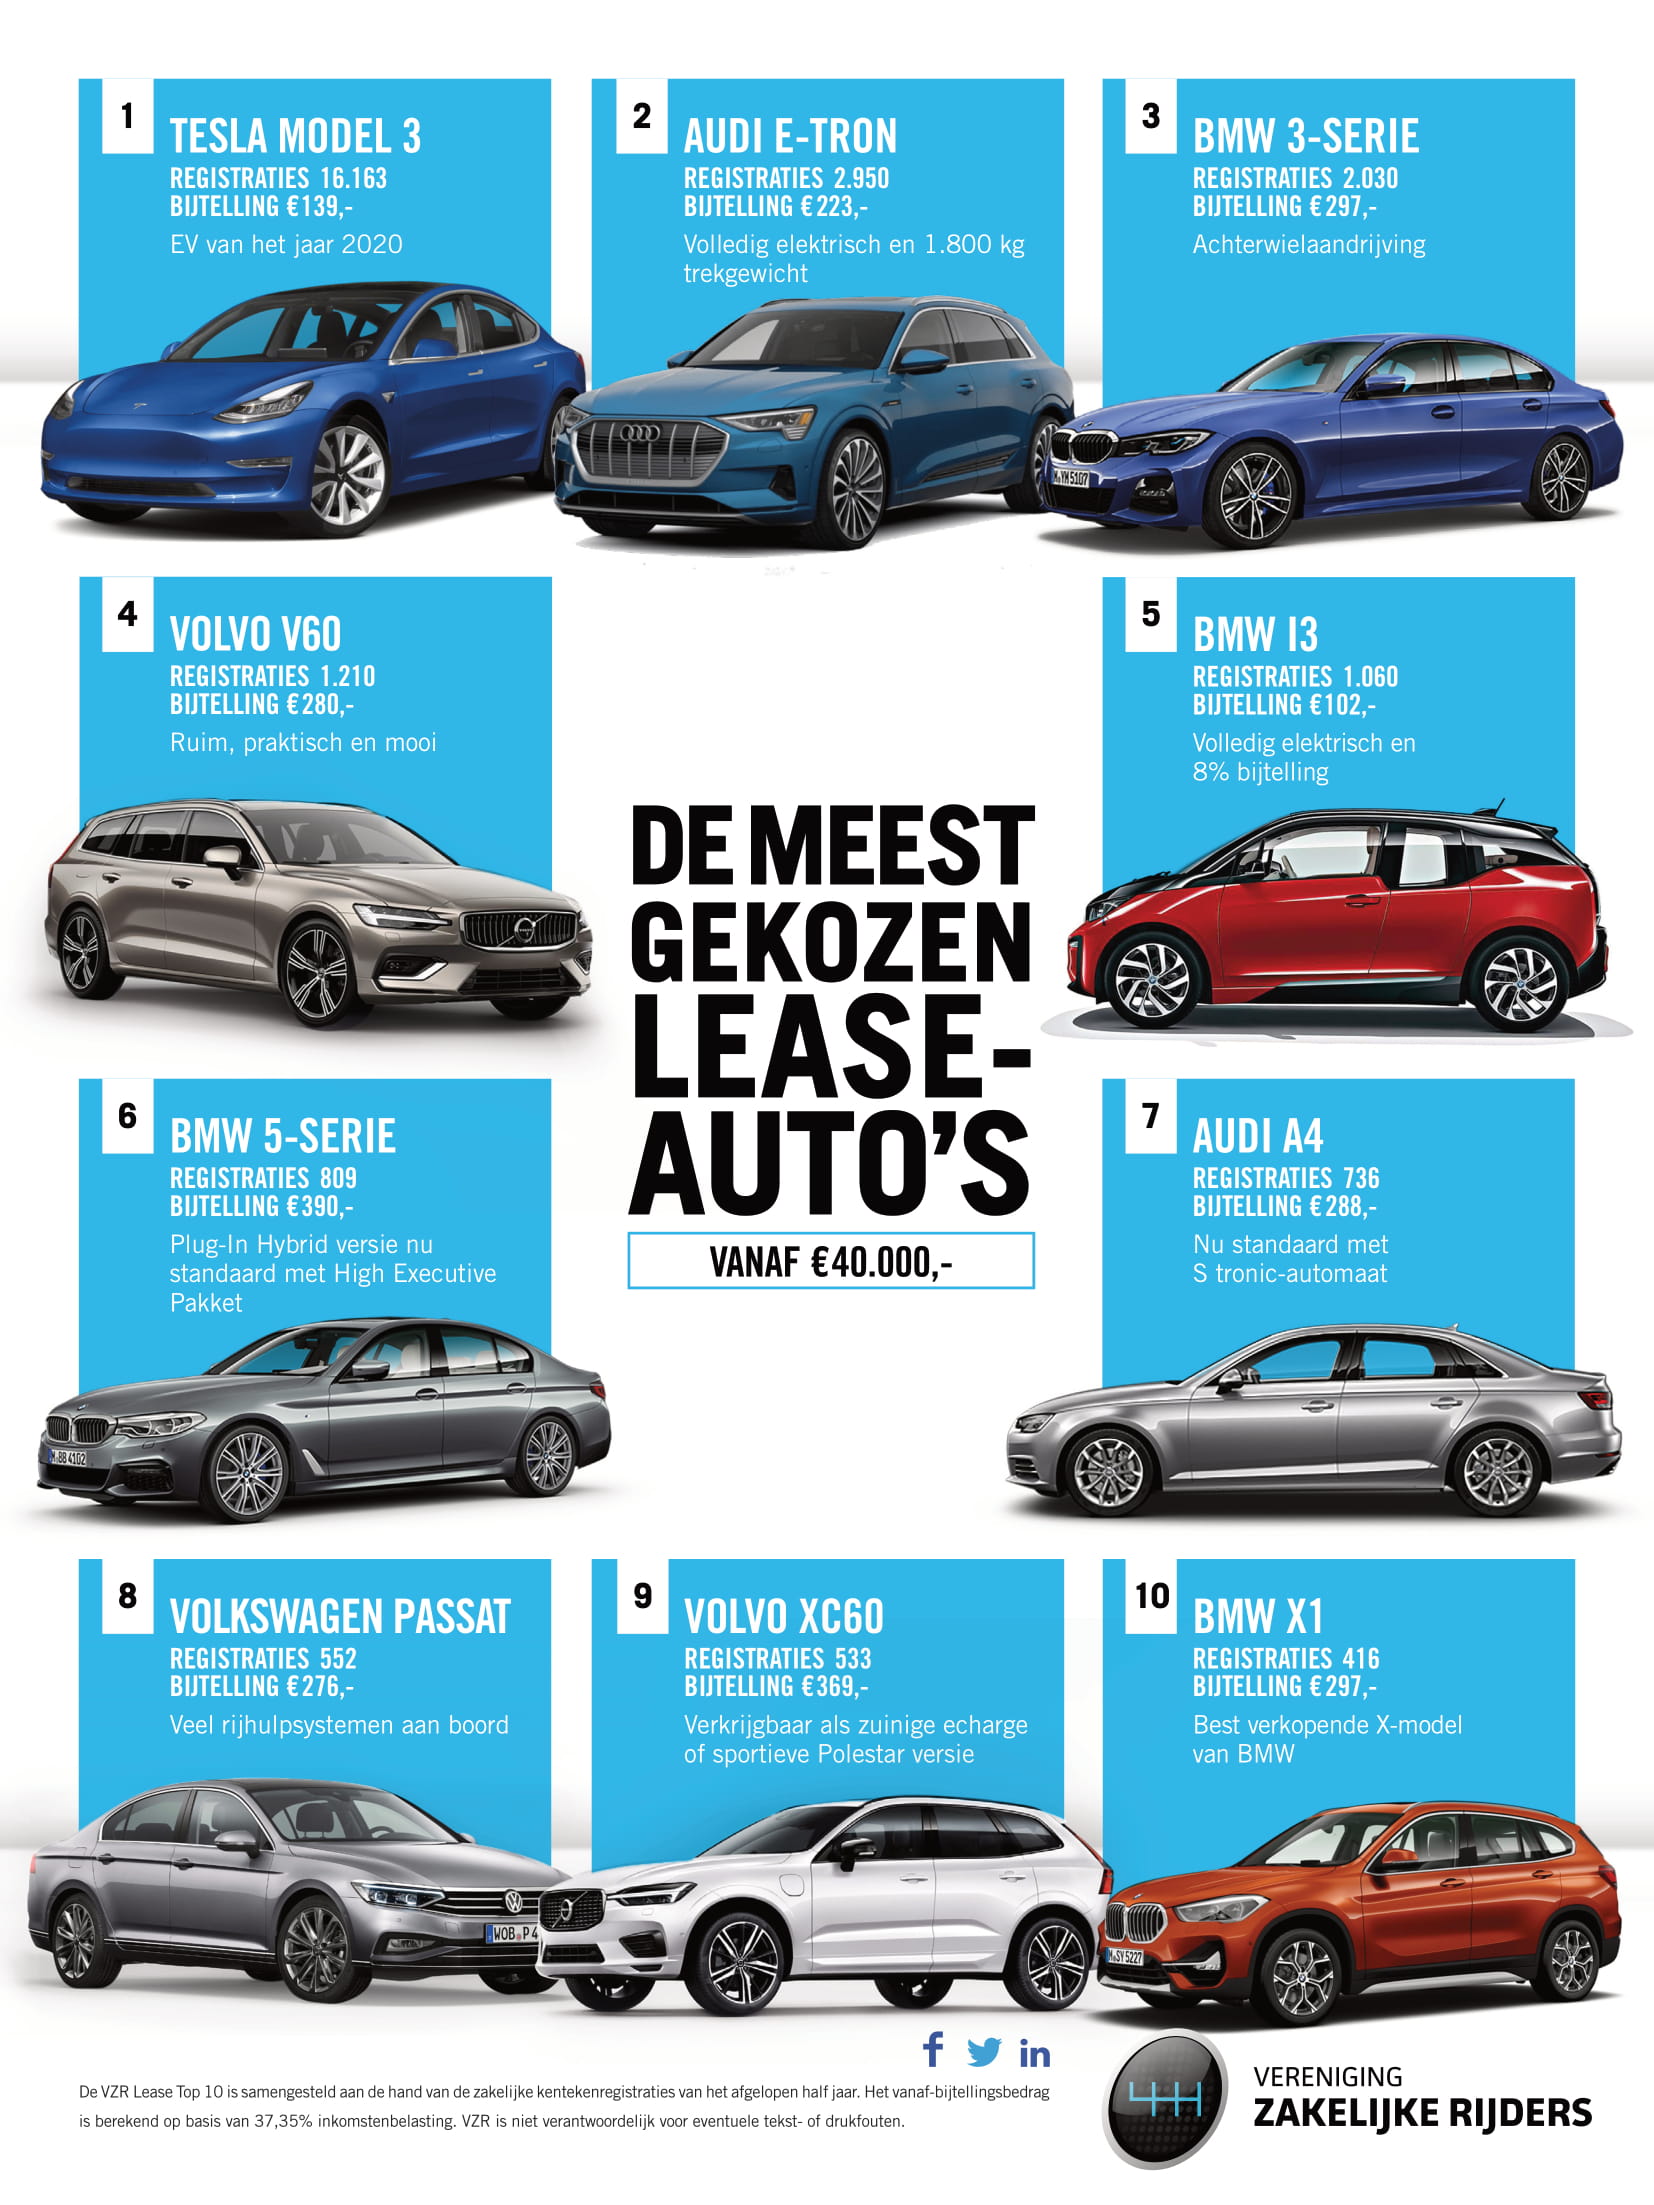 Lease Top 10 - leaseauto's vanaf euro